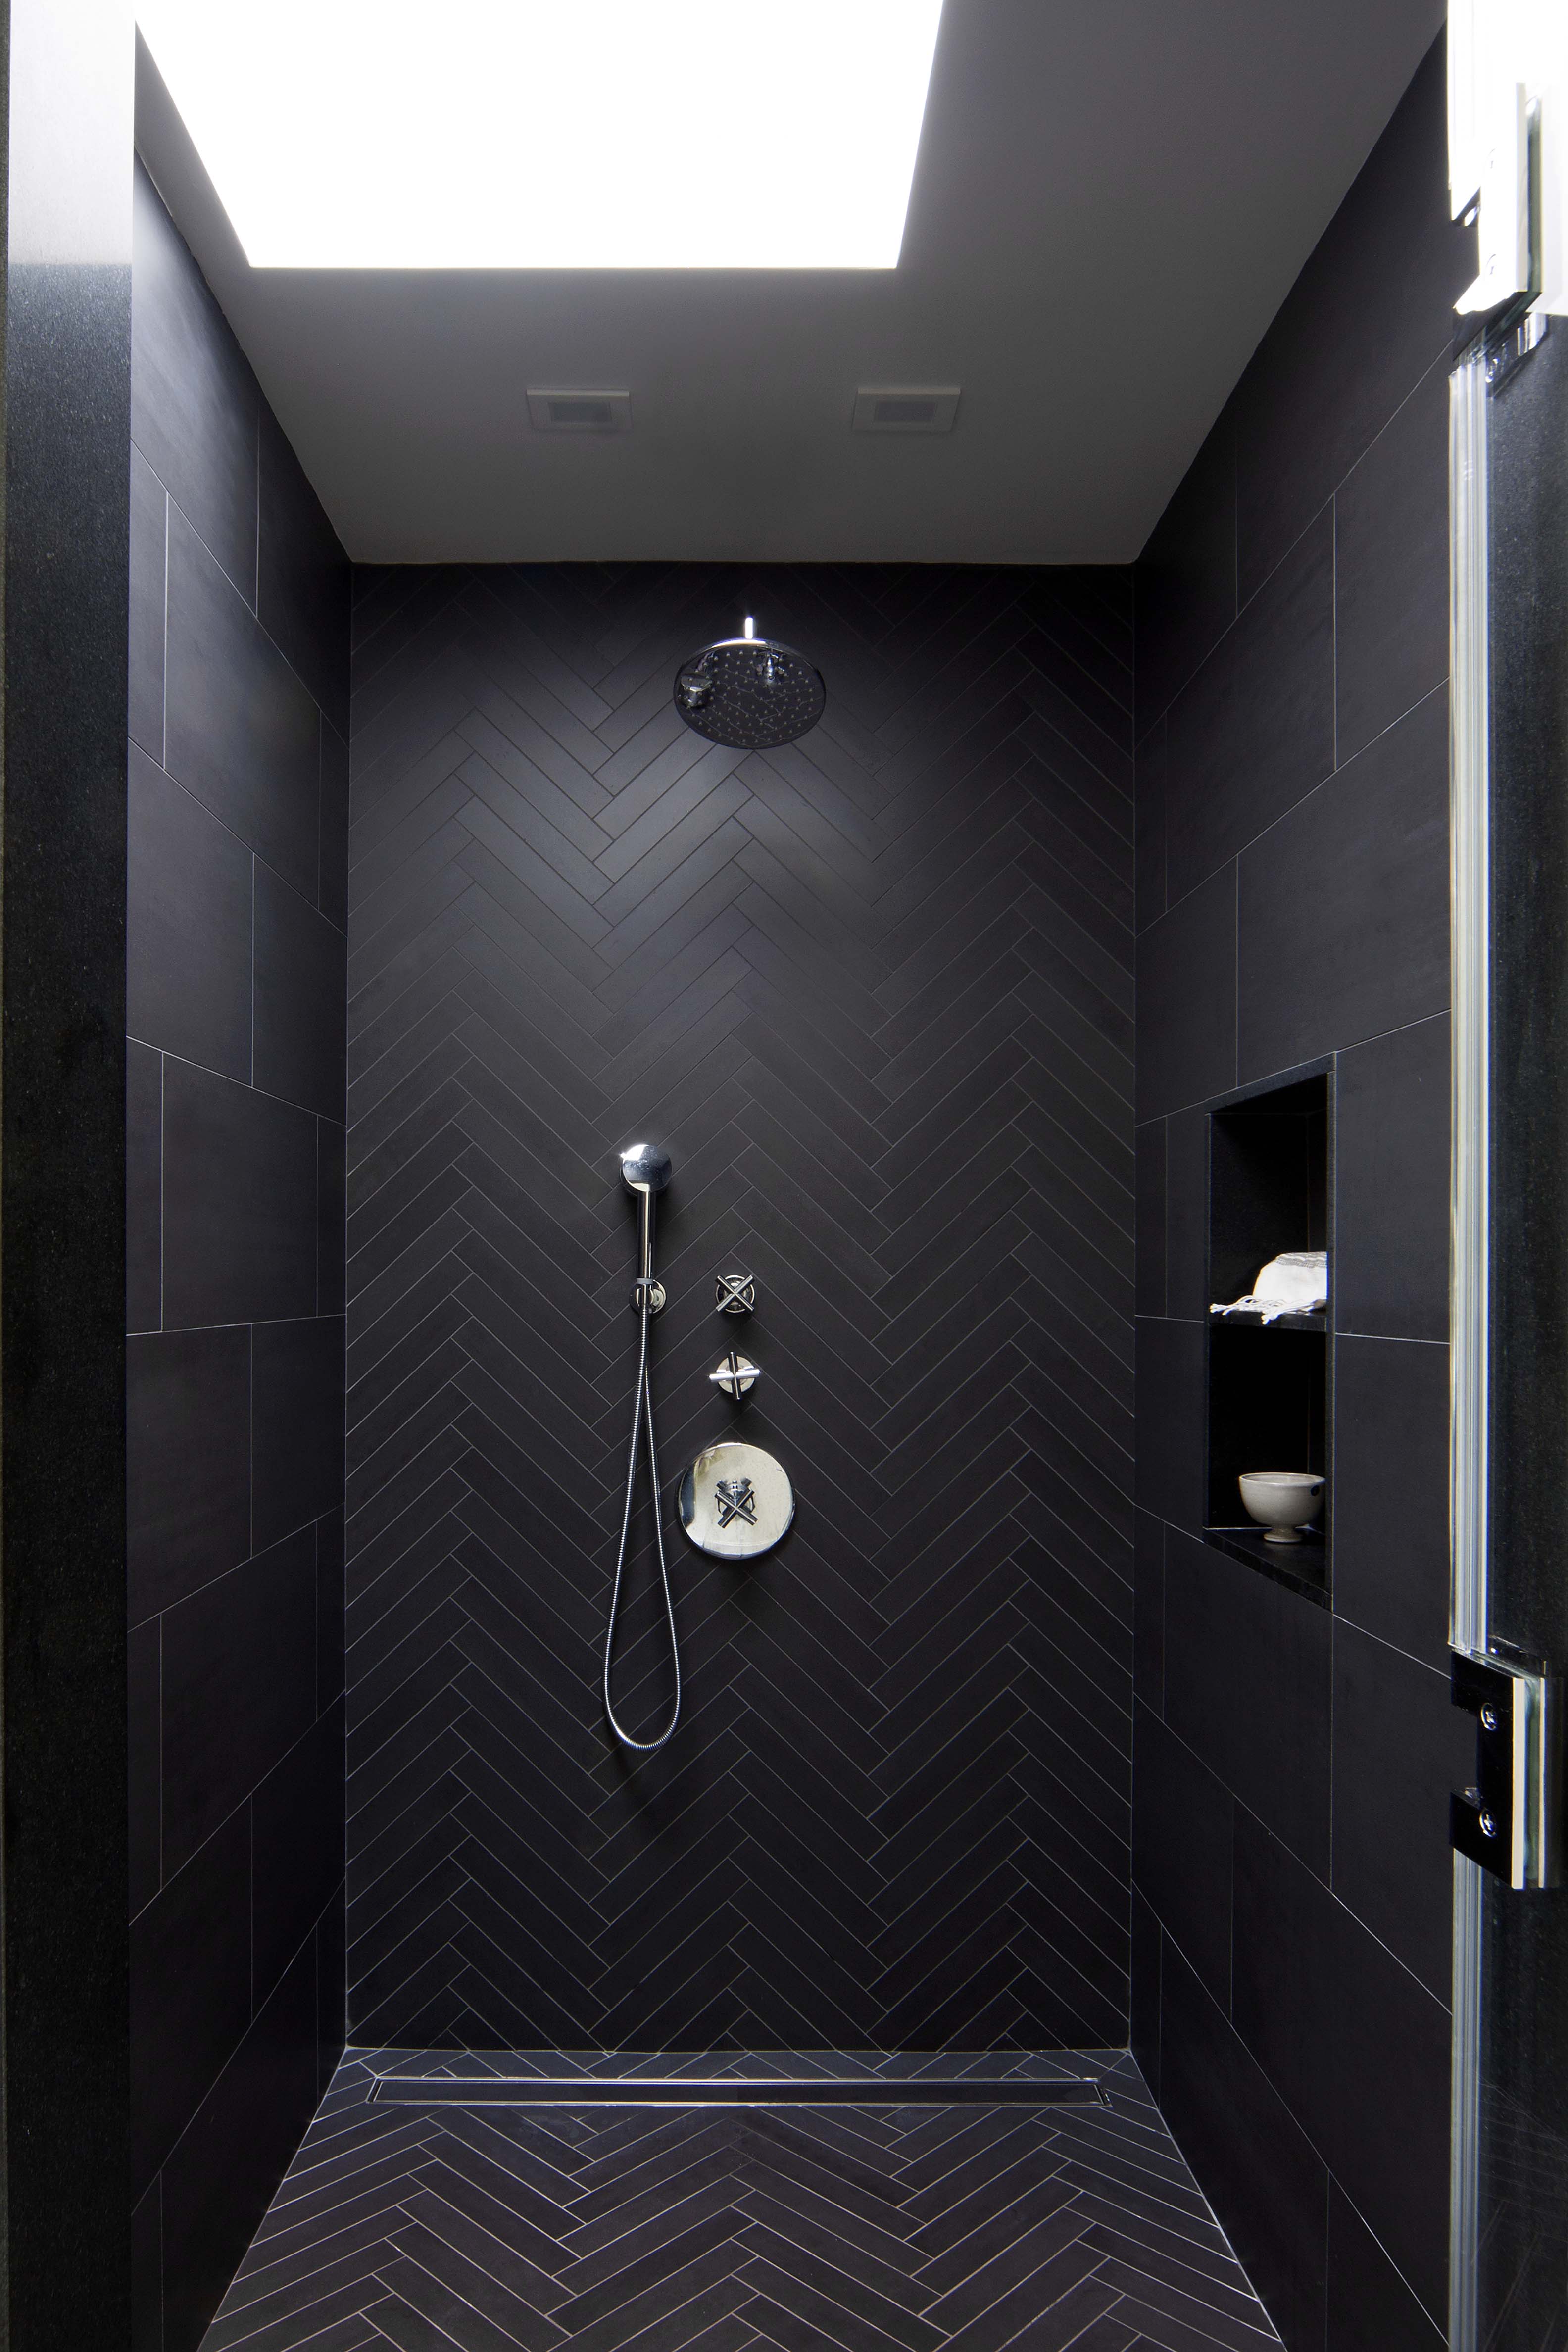 tiled bathroom showers